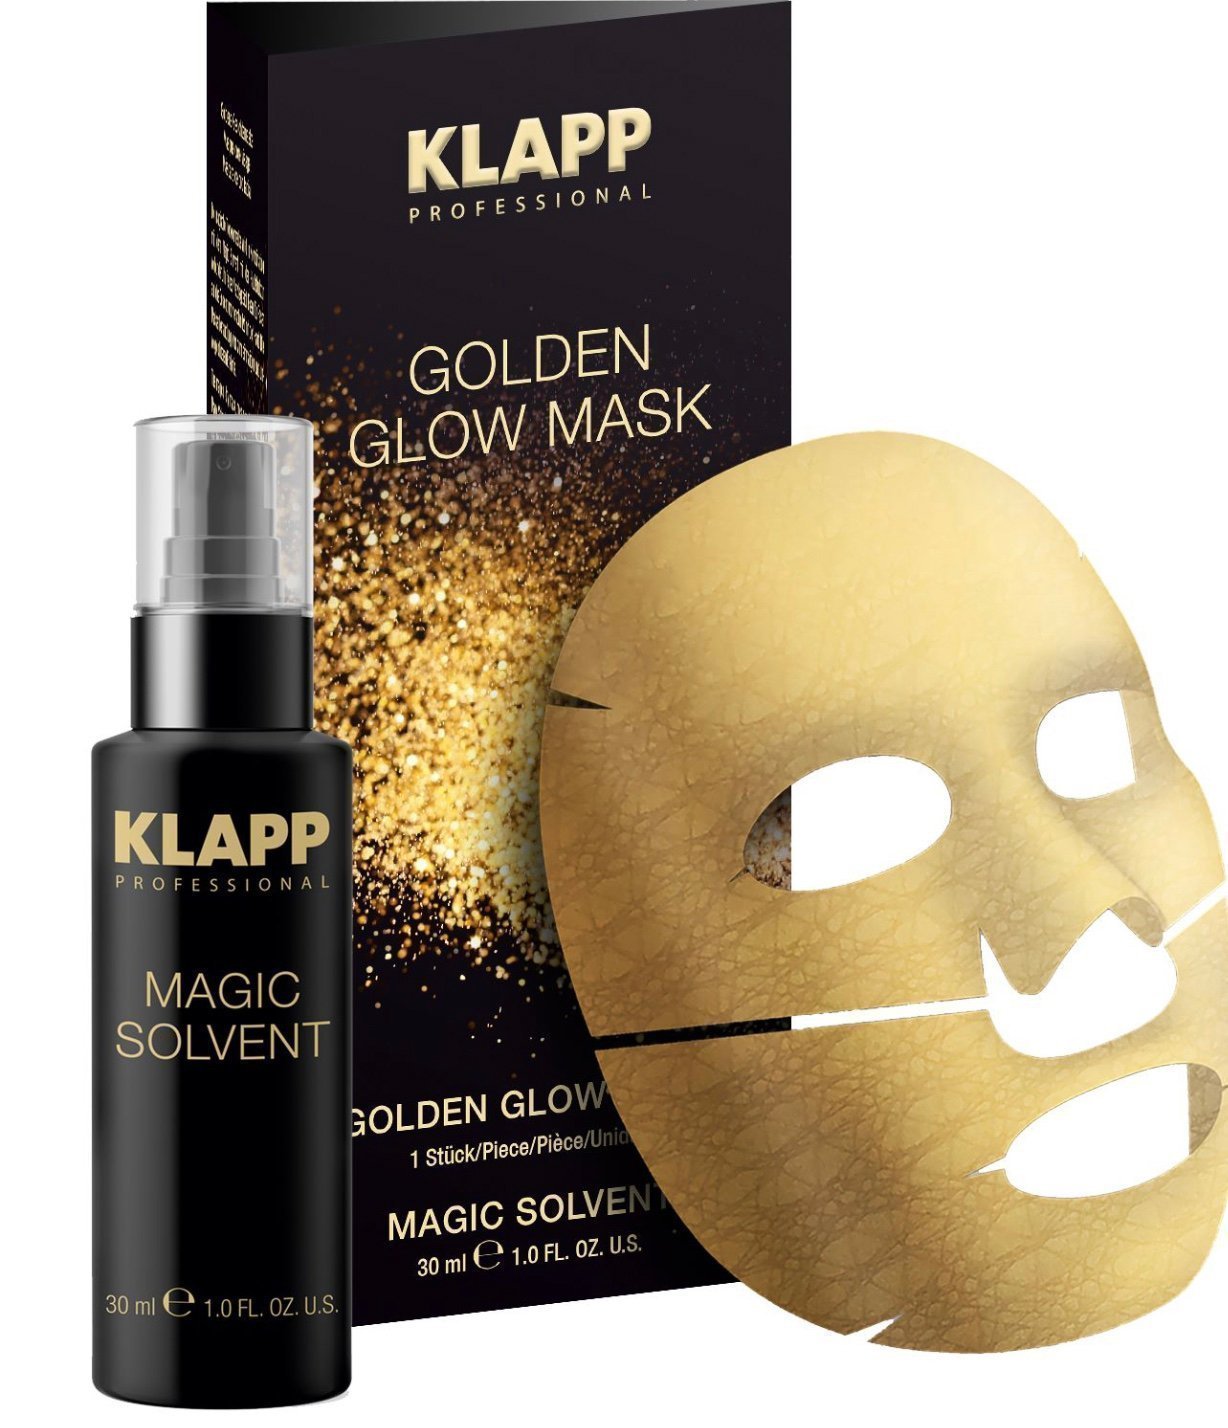 Klapp Cosmetics glow mask